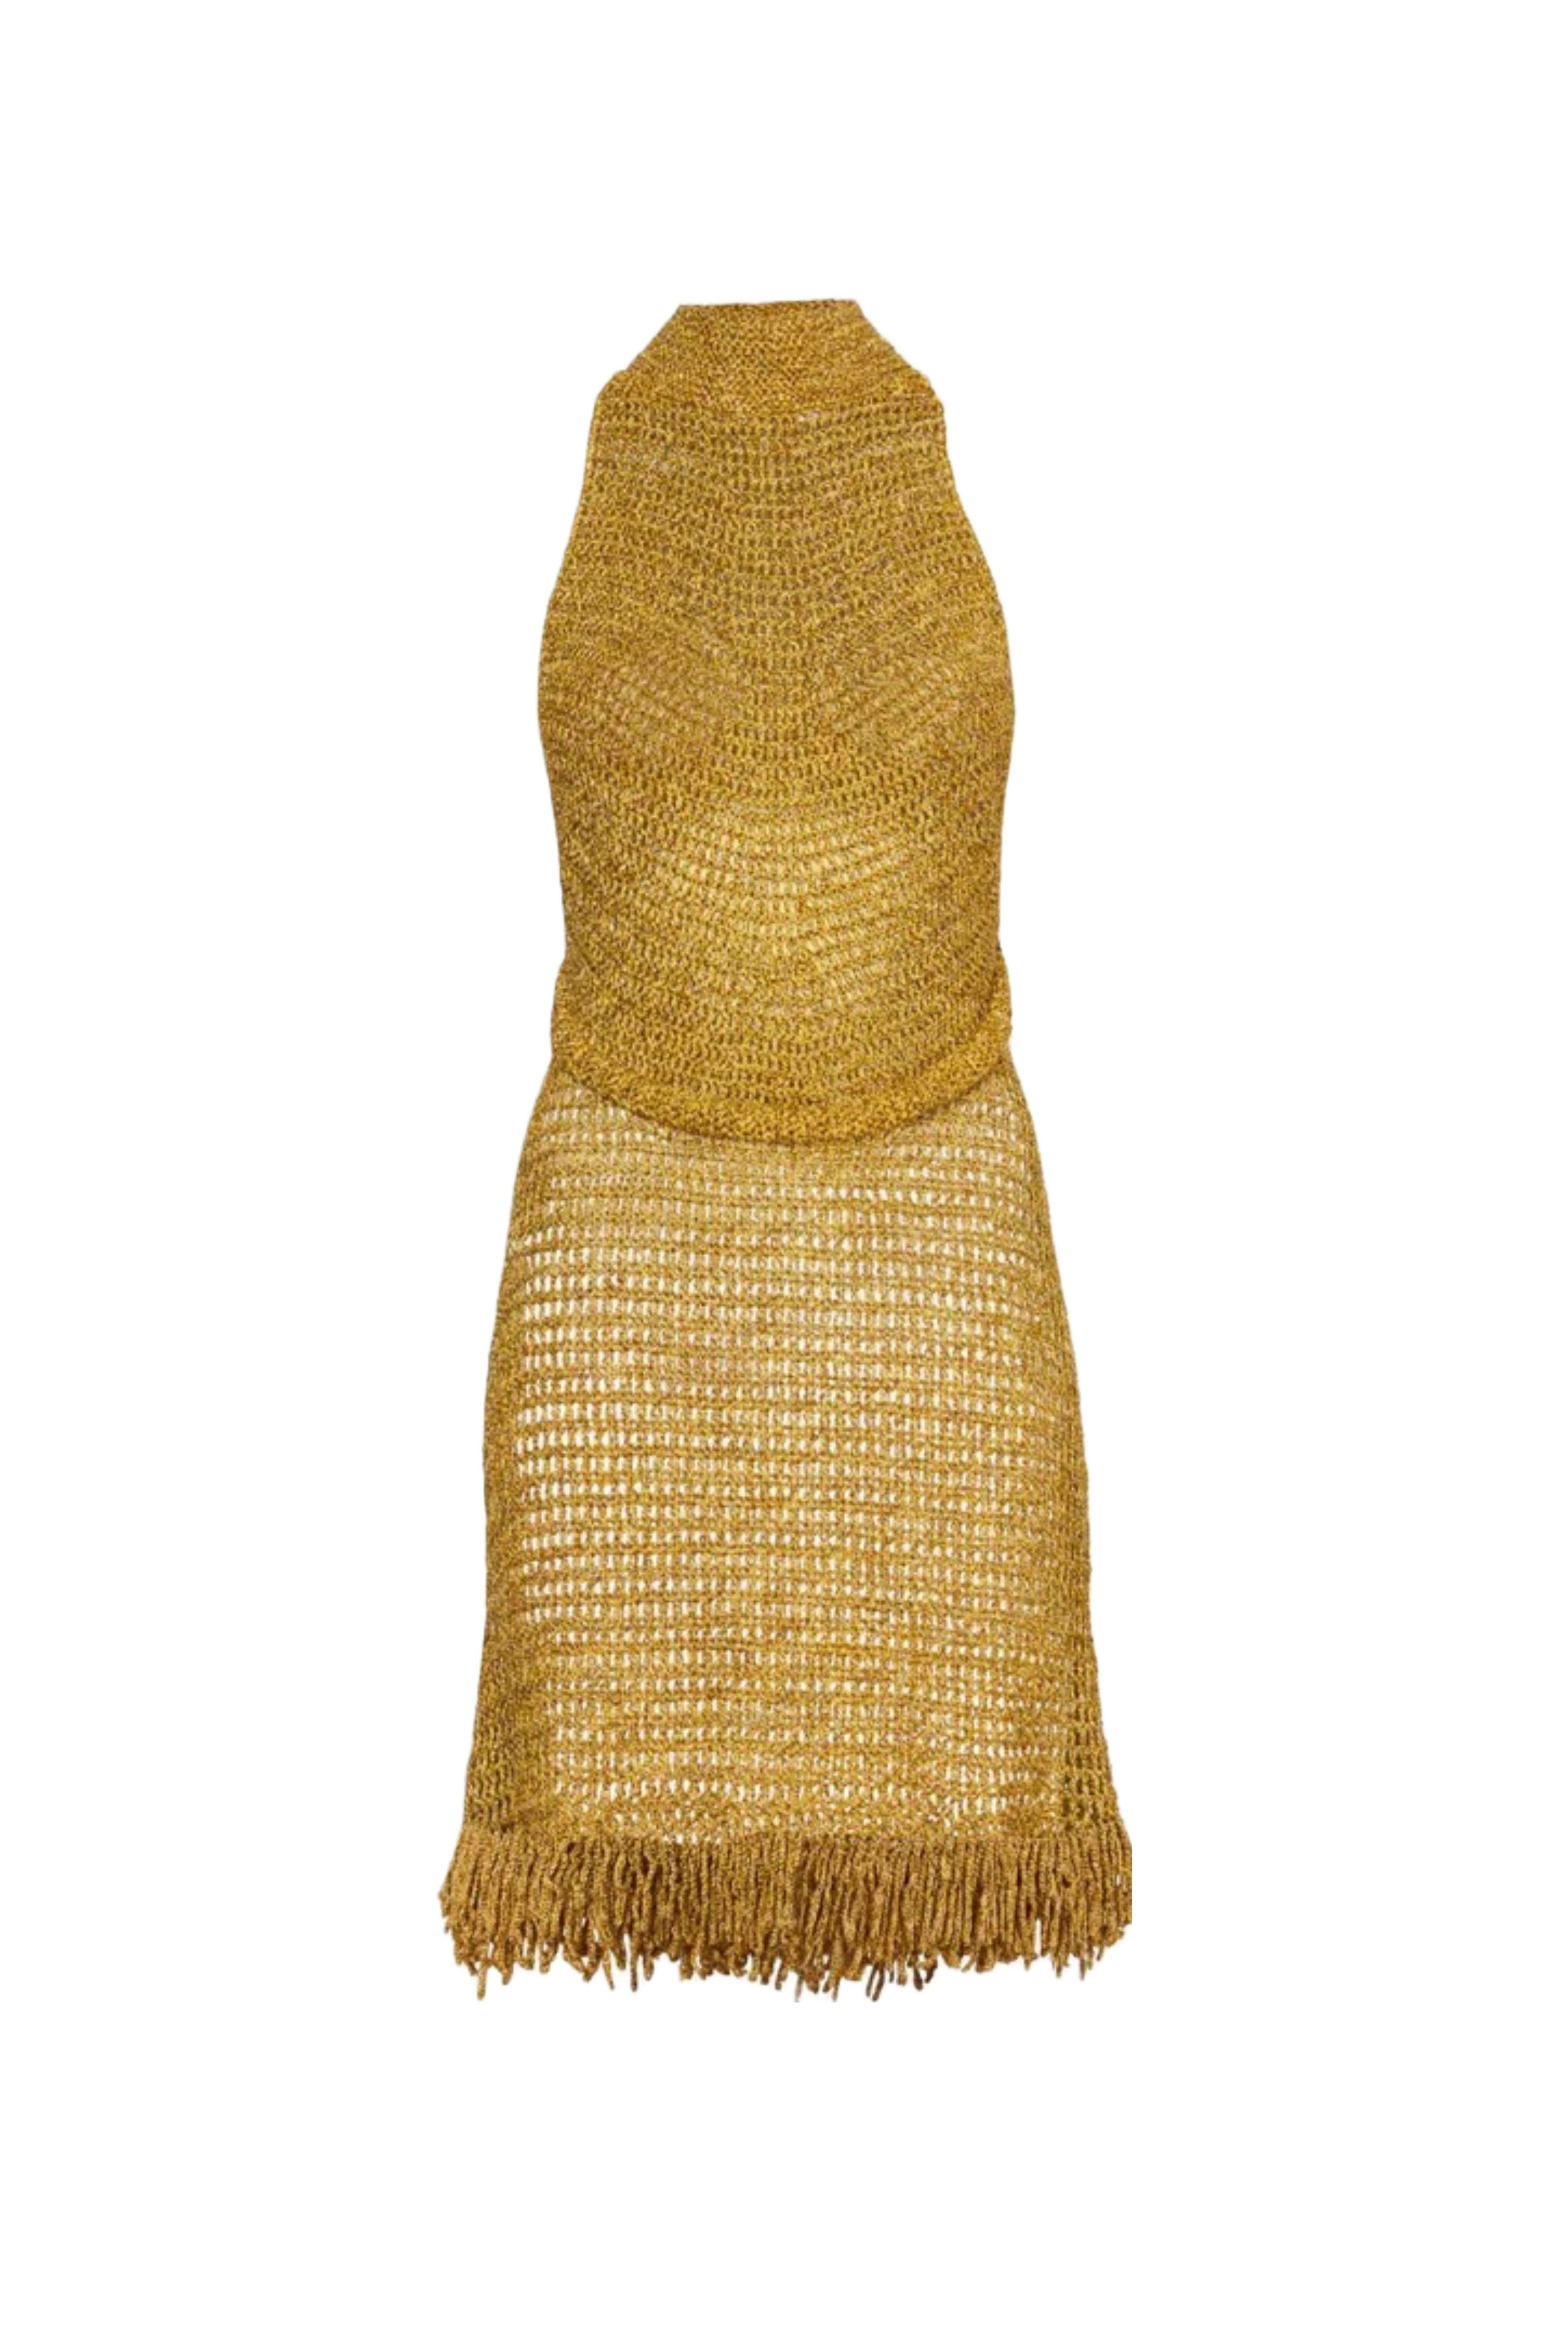 PROENZA SCHOULER Hand Crochet Fringe Dress